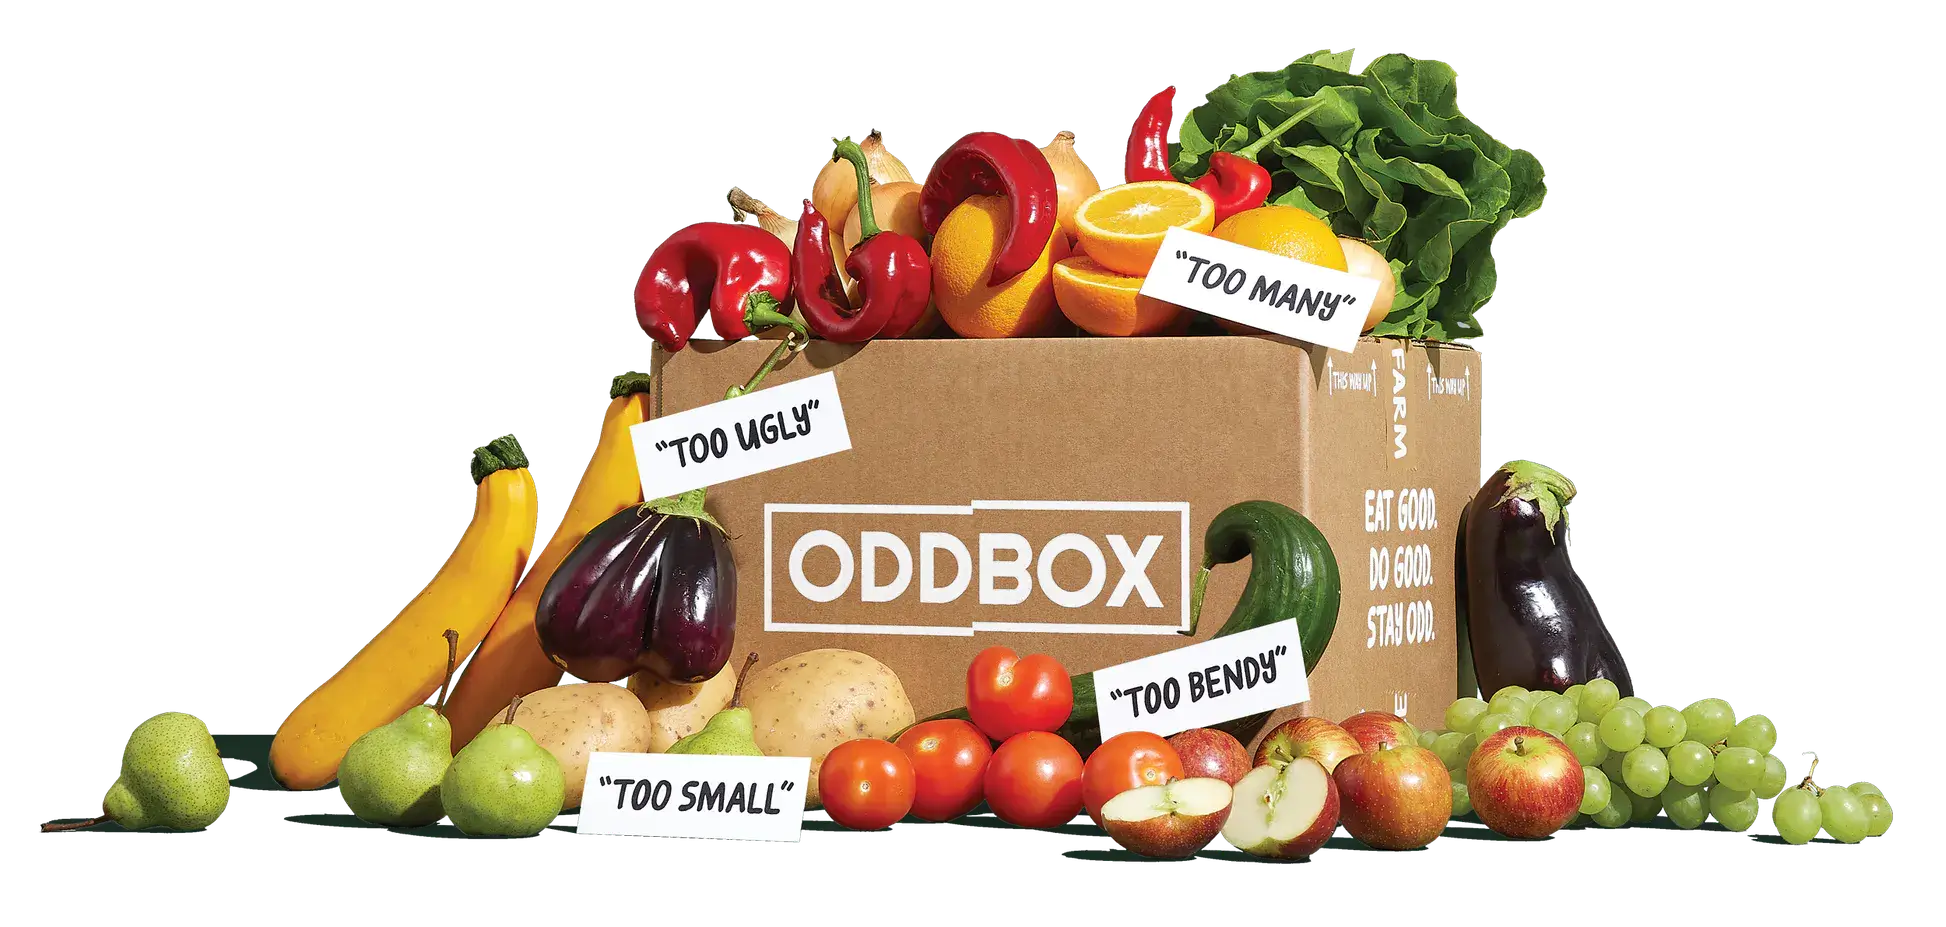 Odd box veg box